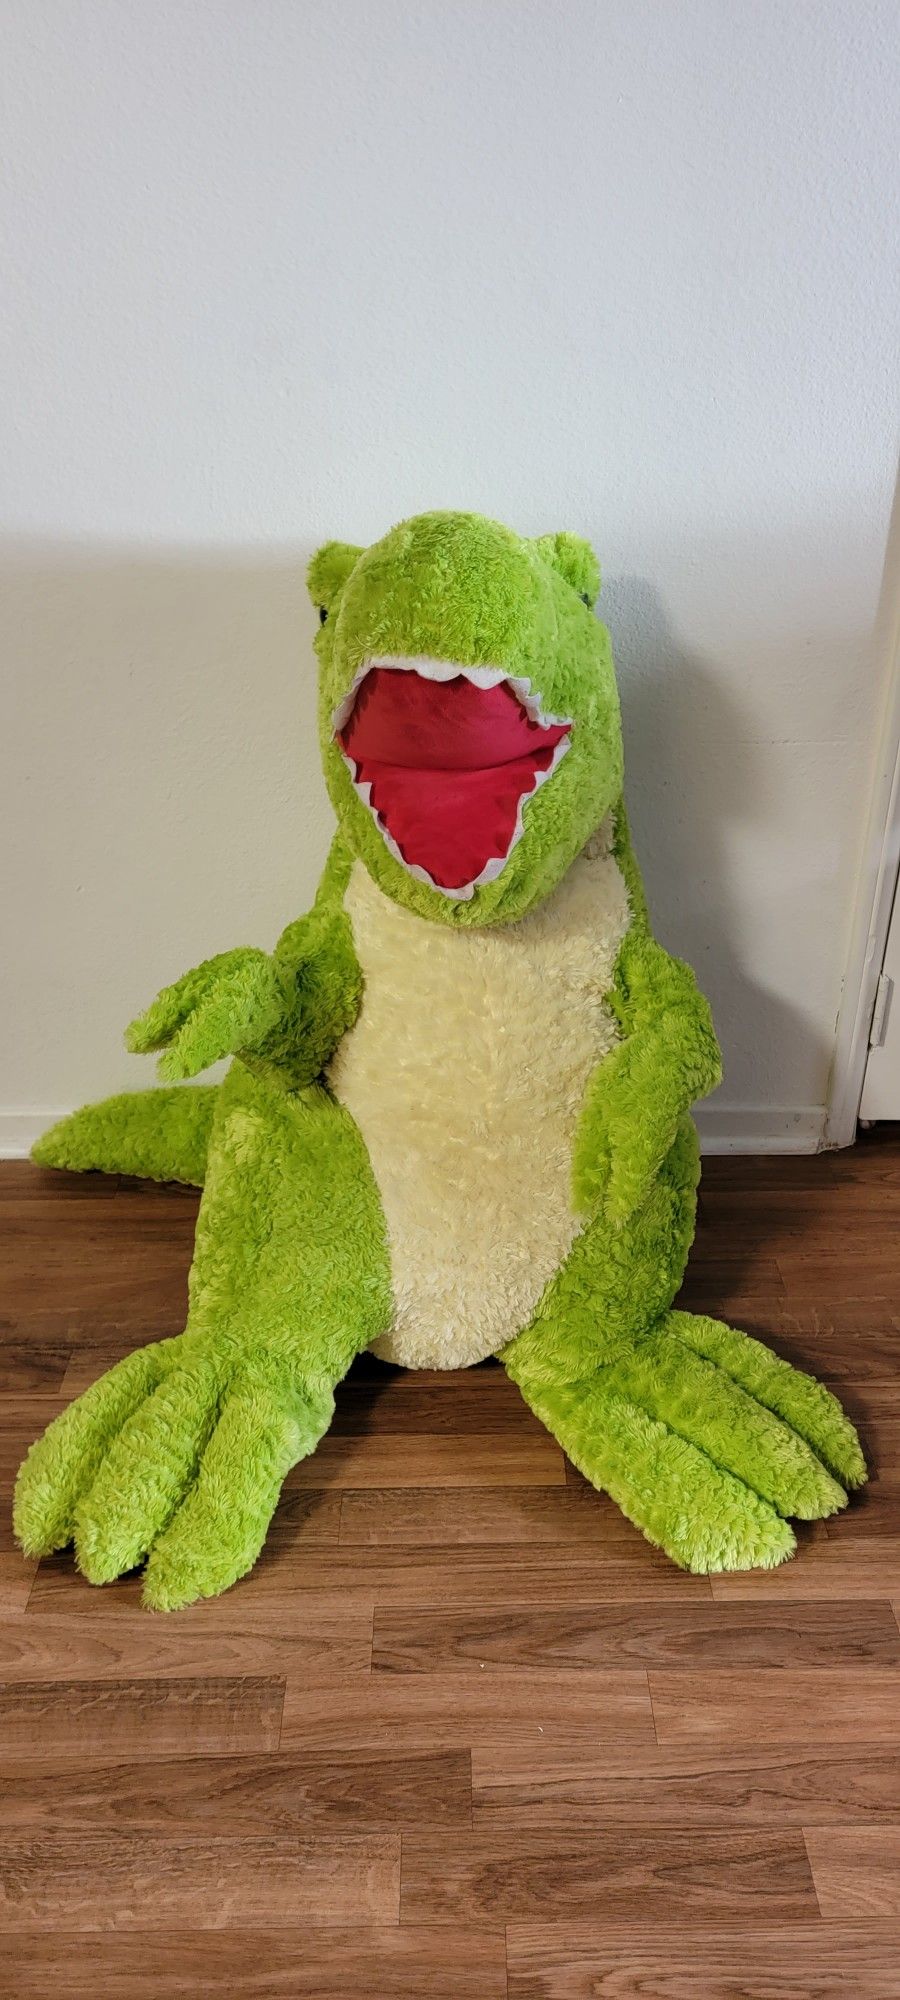 43" Giant Dinosaur Stuffed Animal Plush Toy, Green 

